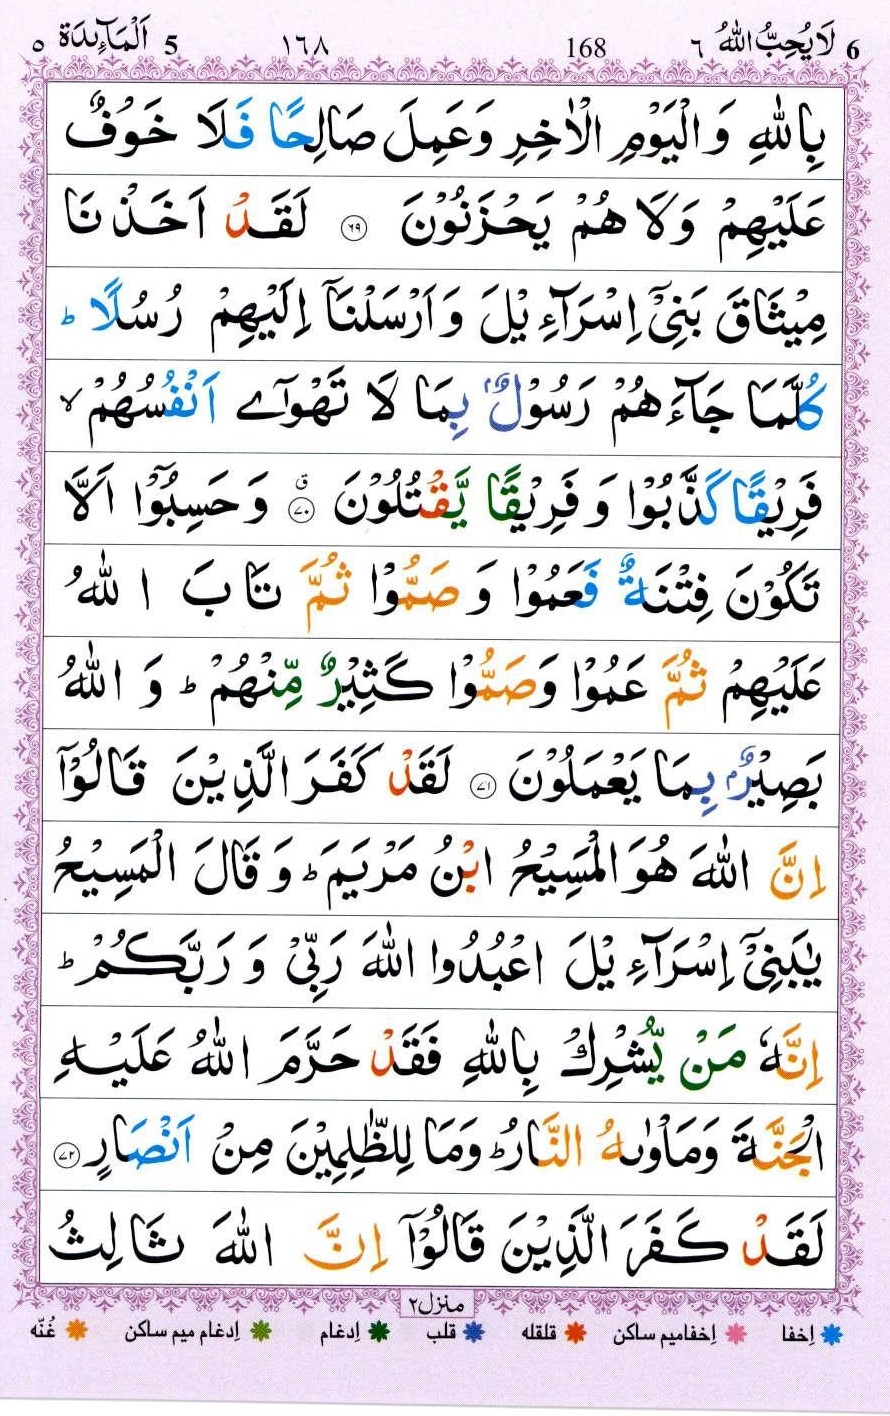 Surah Al Maidah in English